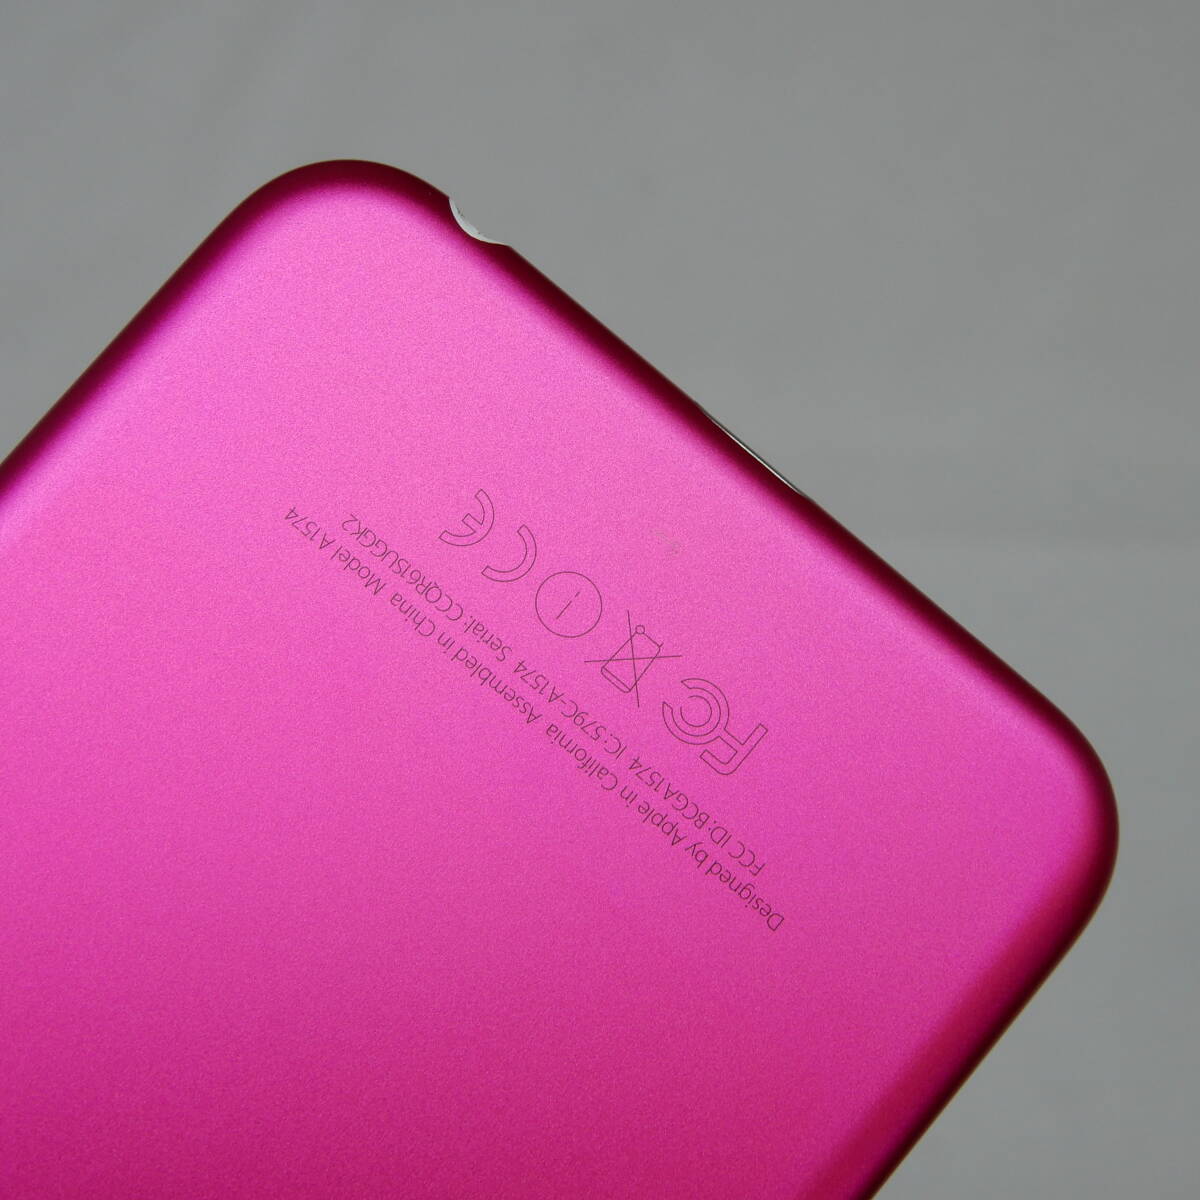 APPLE iPod touch no. шесть поколение MKGX2J/A 16GB розовый утиль NO.240426022